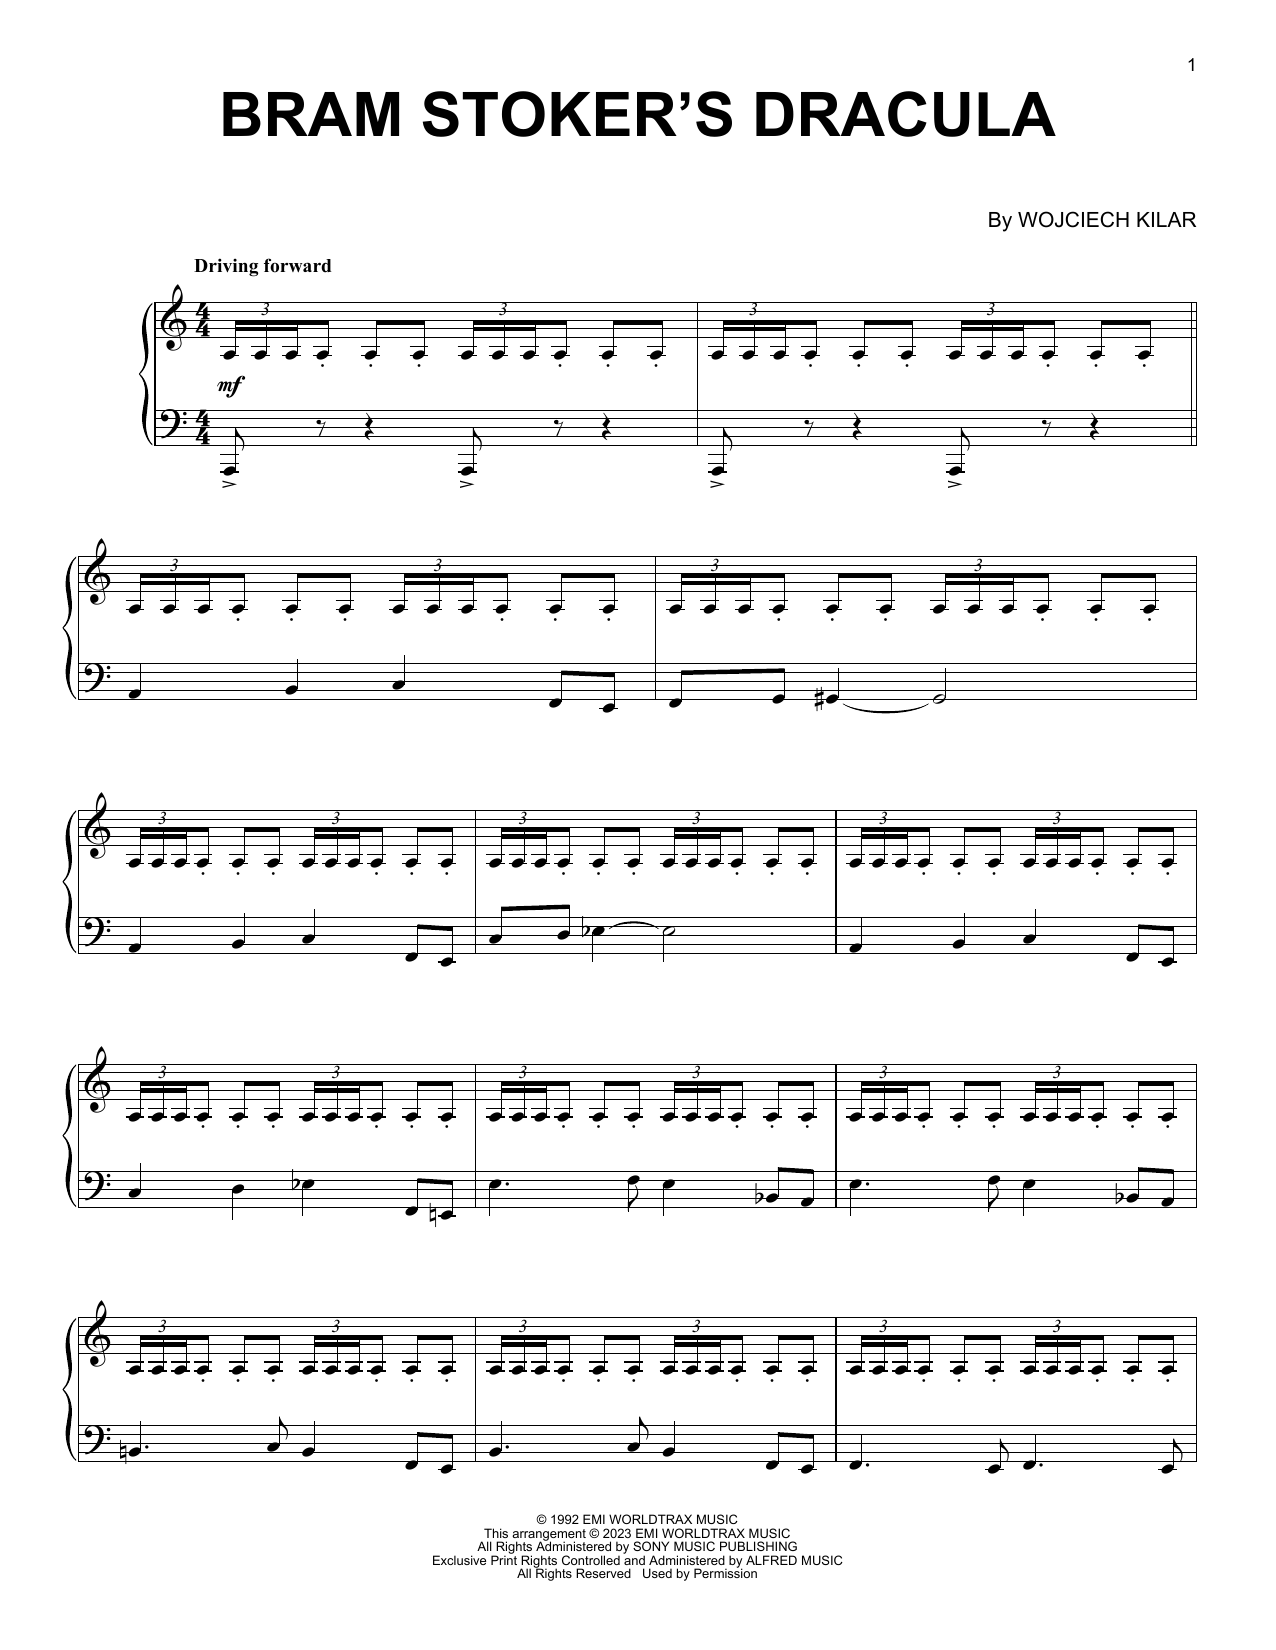 Wojciech Kilar Bram Stoker's Dracula Sheet Music Notes & Chords for Piano Solo - Download or Print PDF